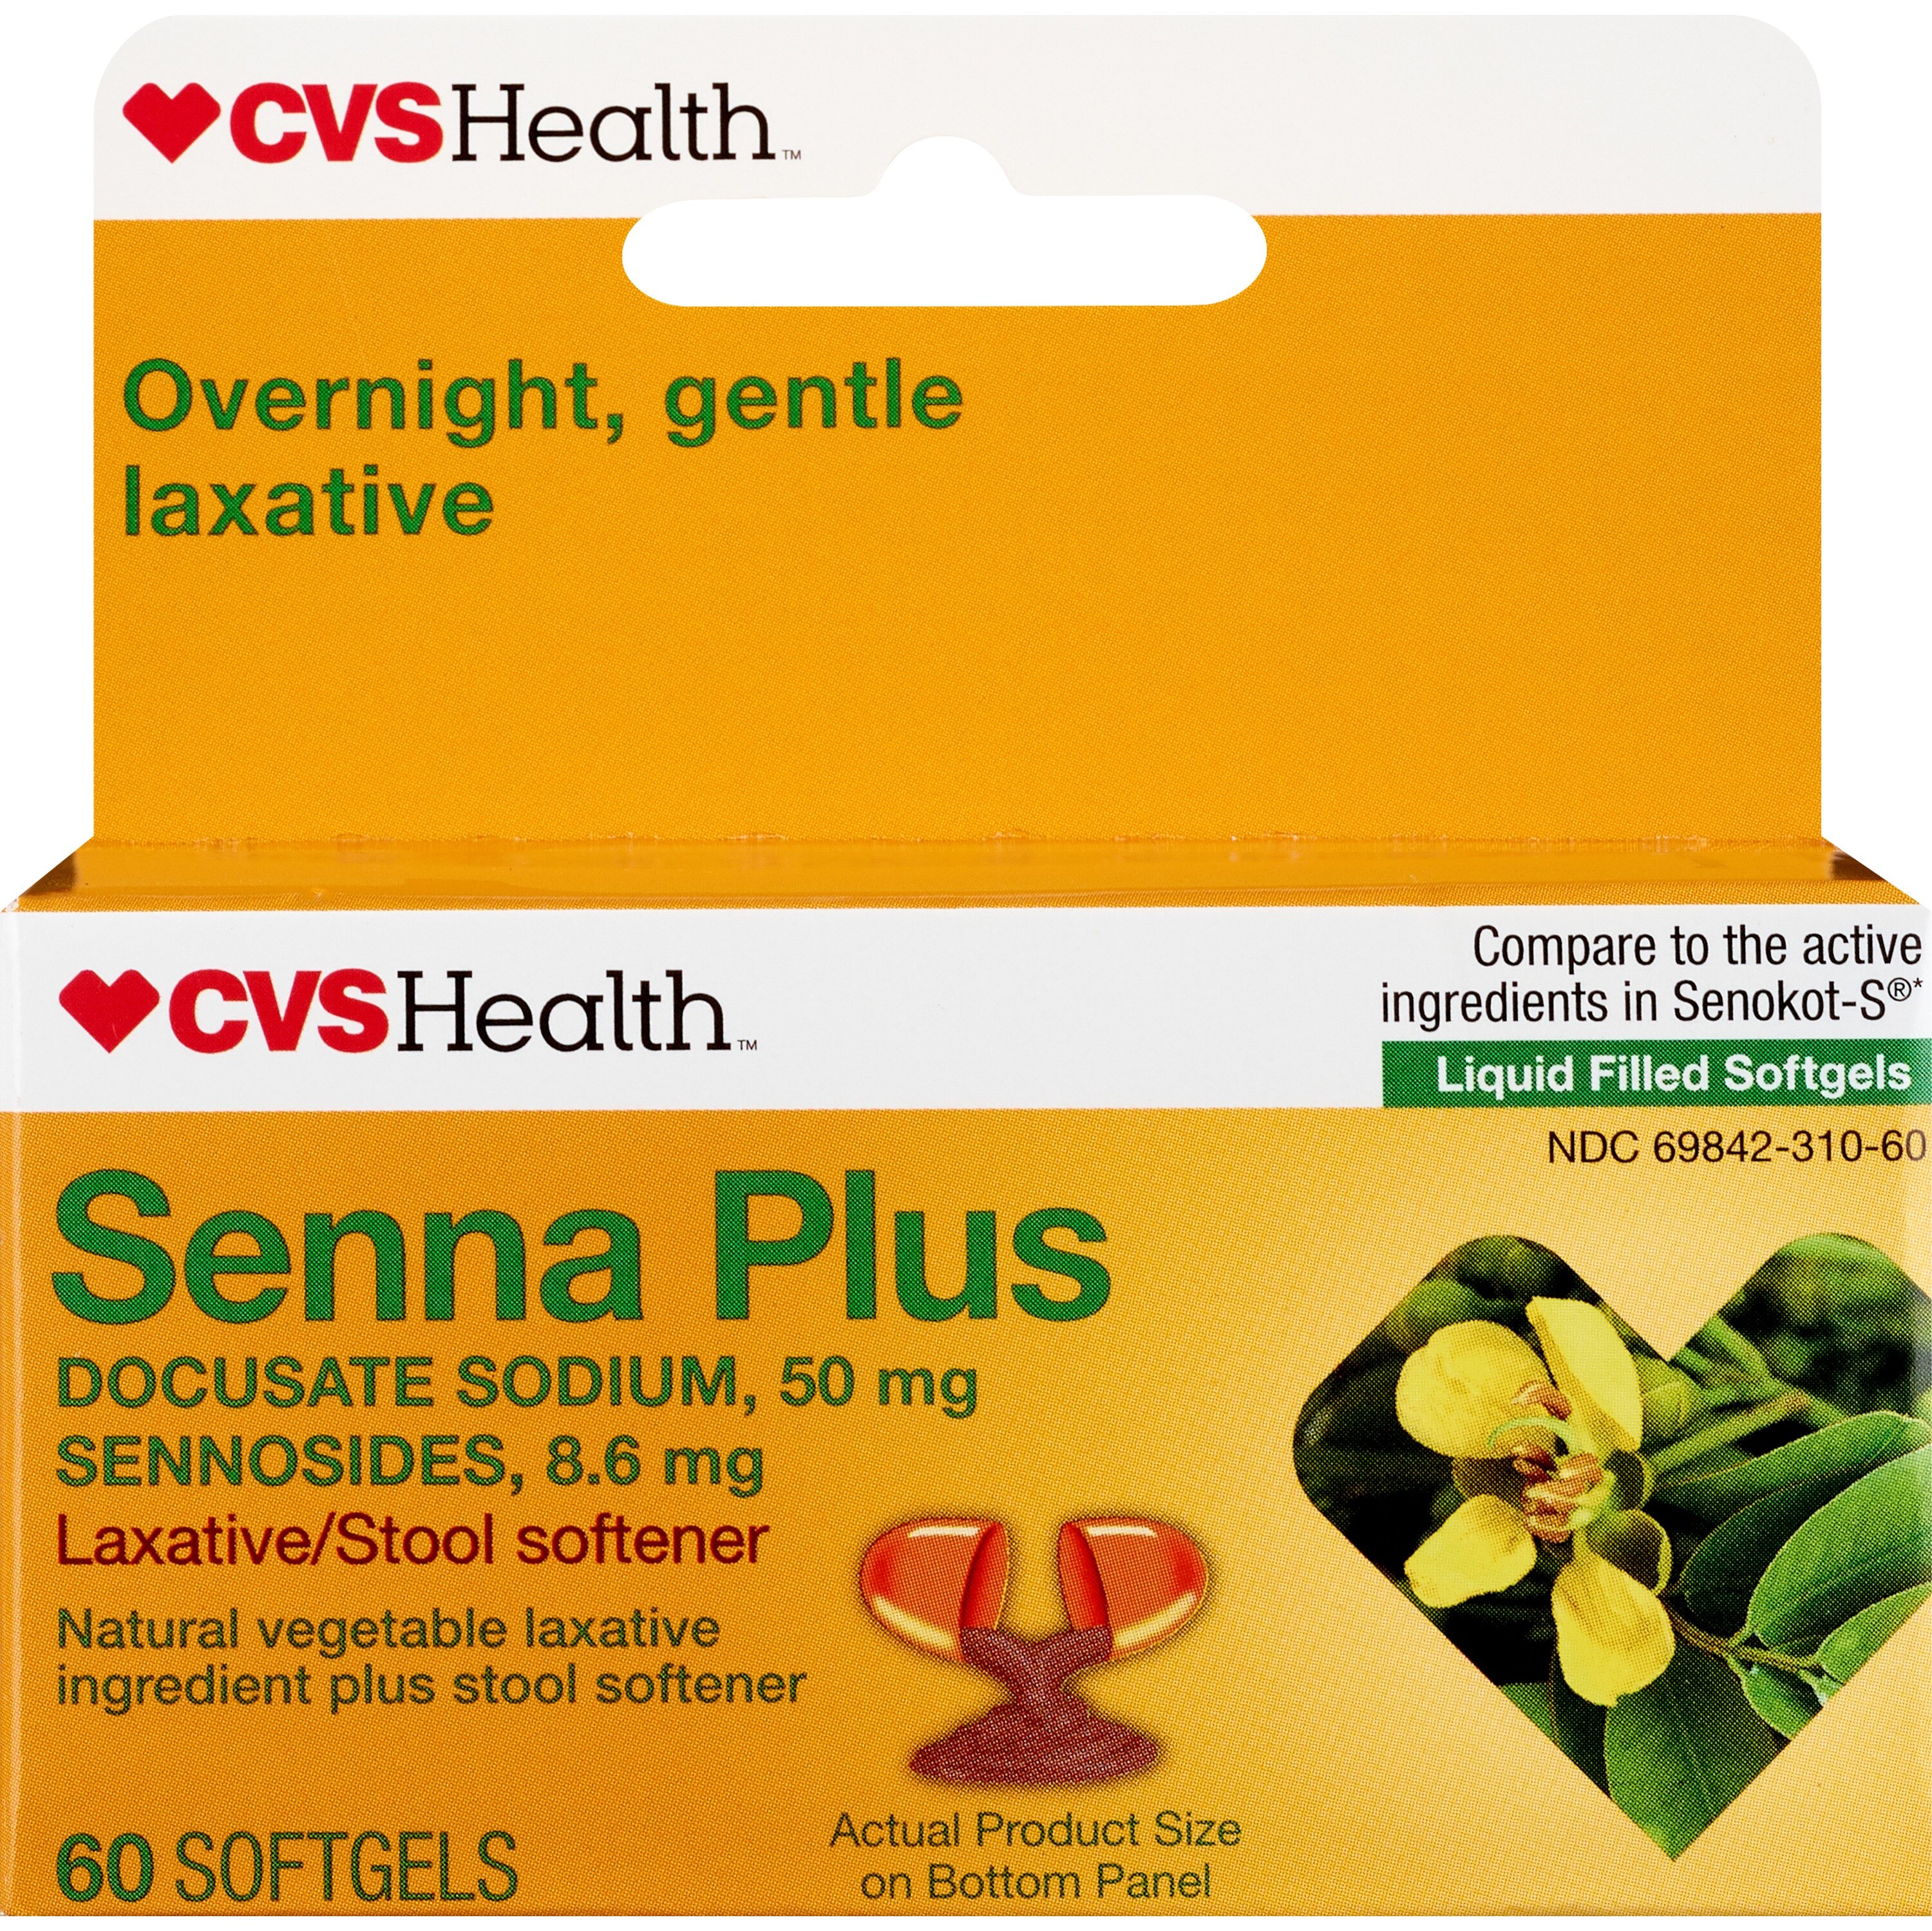 CVS Health Senna Plus Softgels